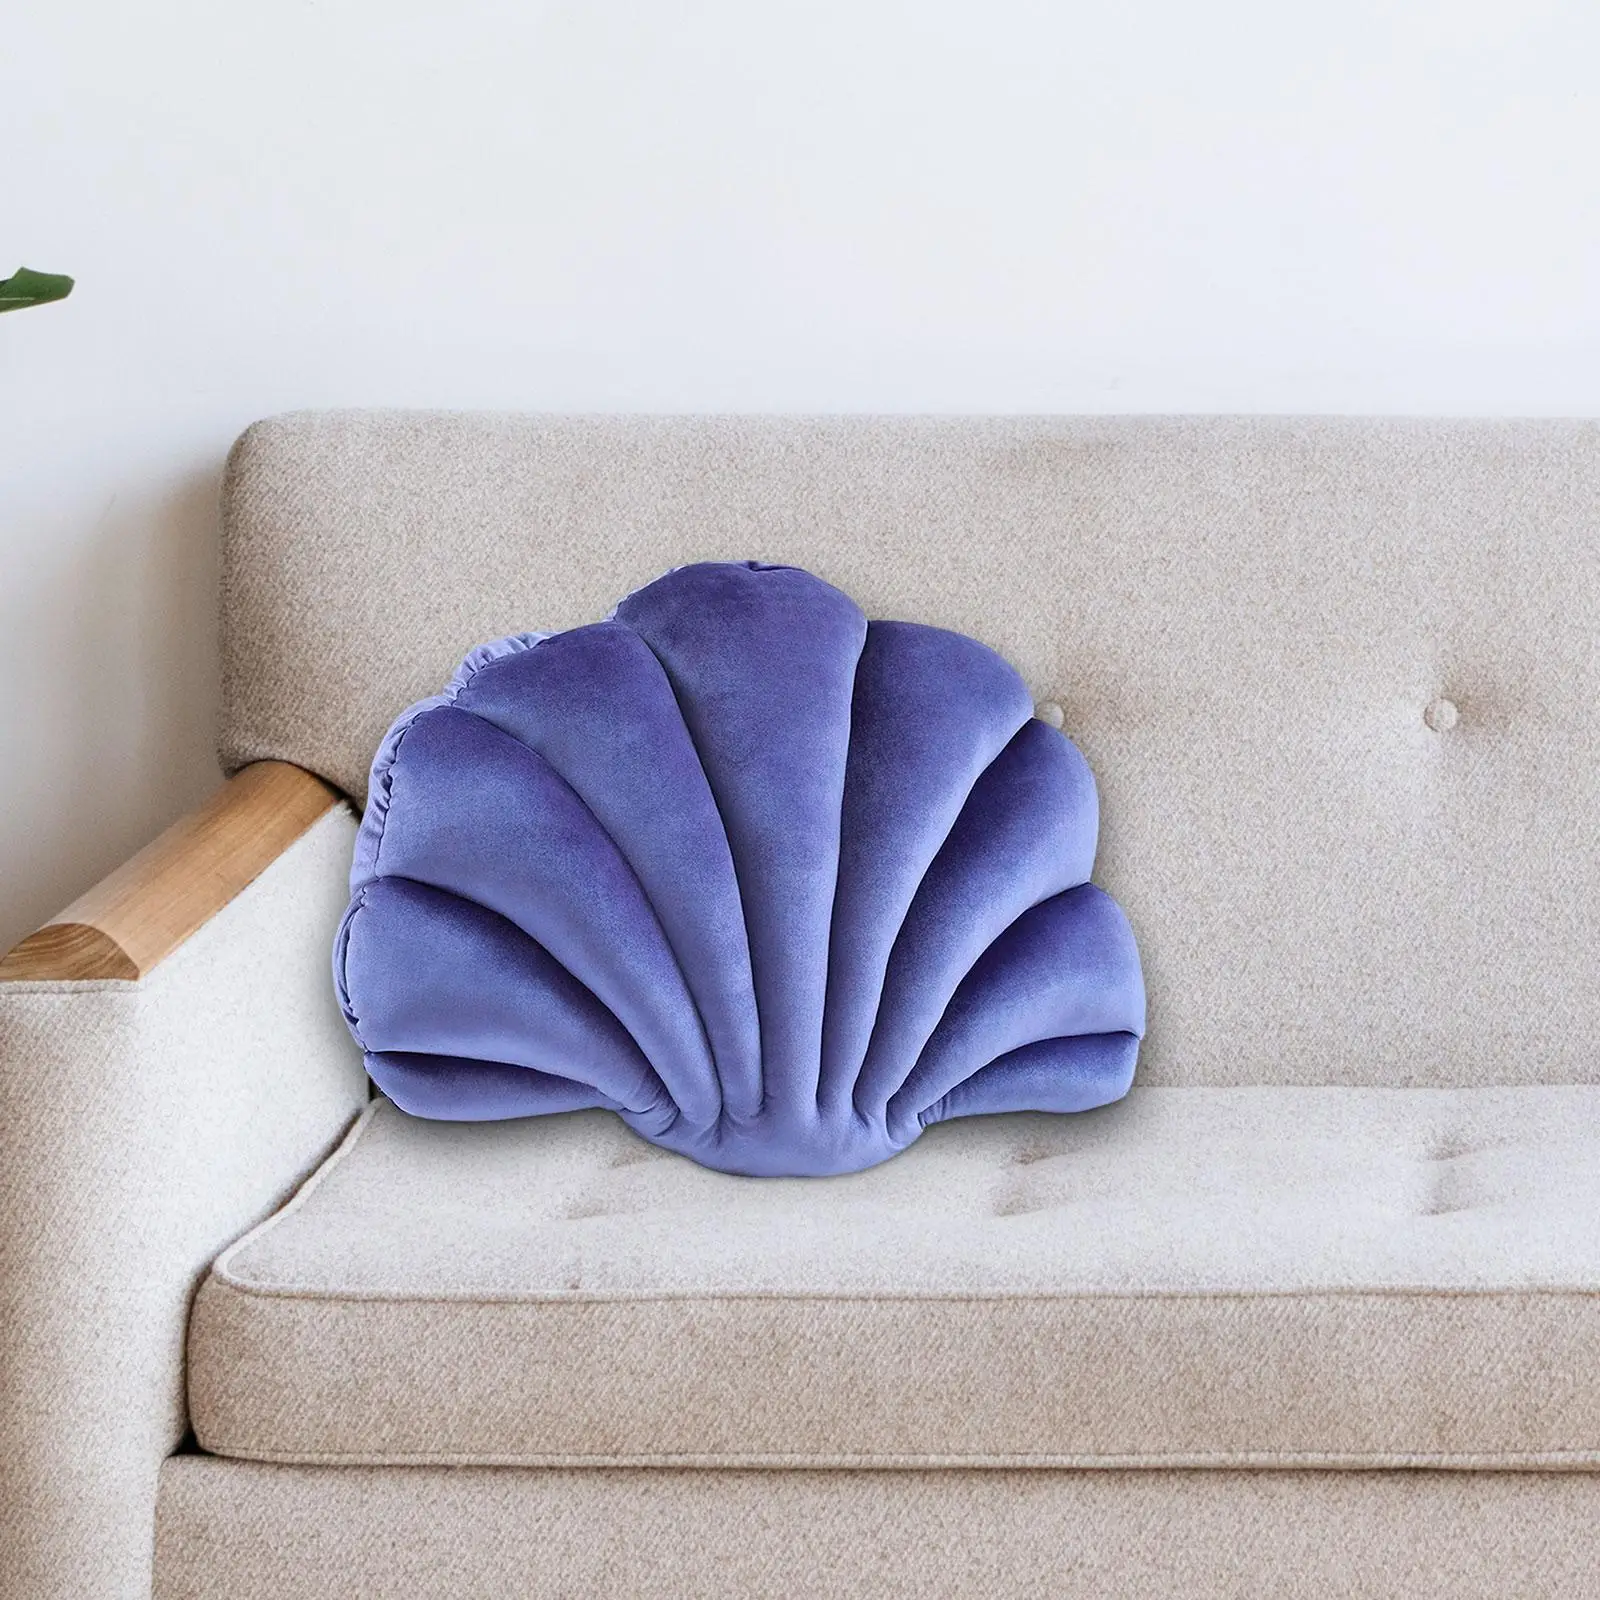 Shell Pillow, Shell Chair Cushion, Firm Plush Car Cushion, Bedroom Decor, Room